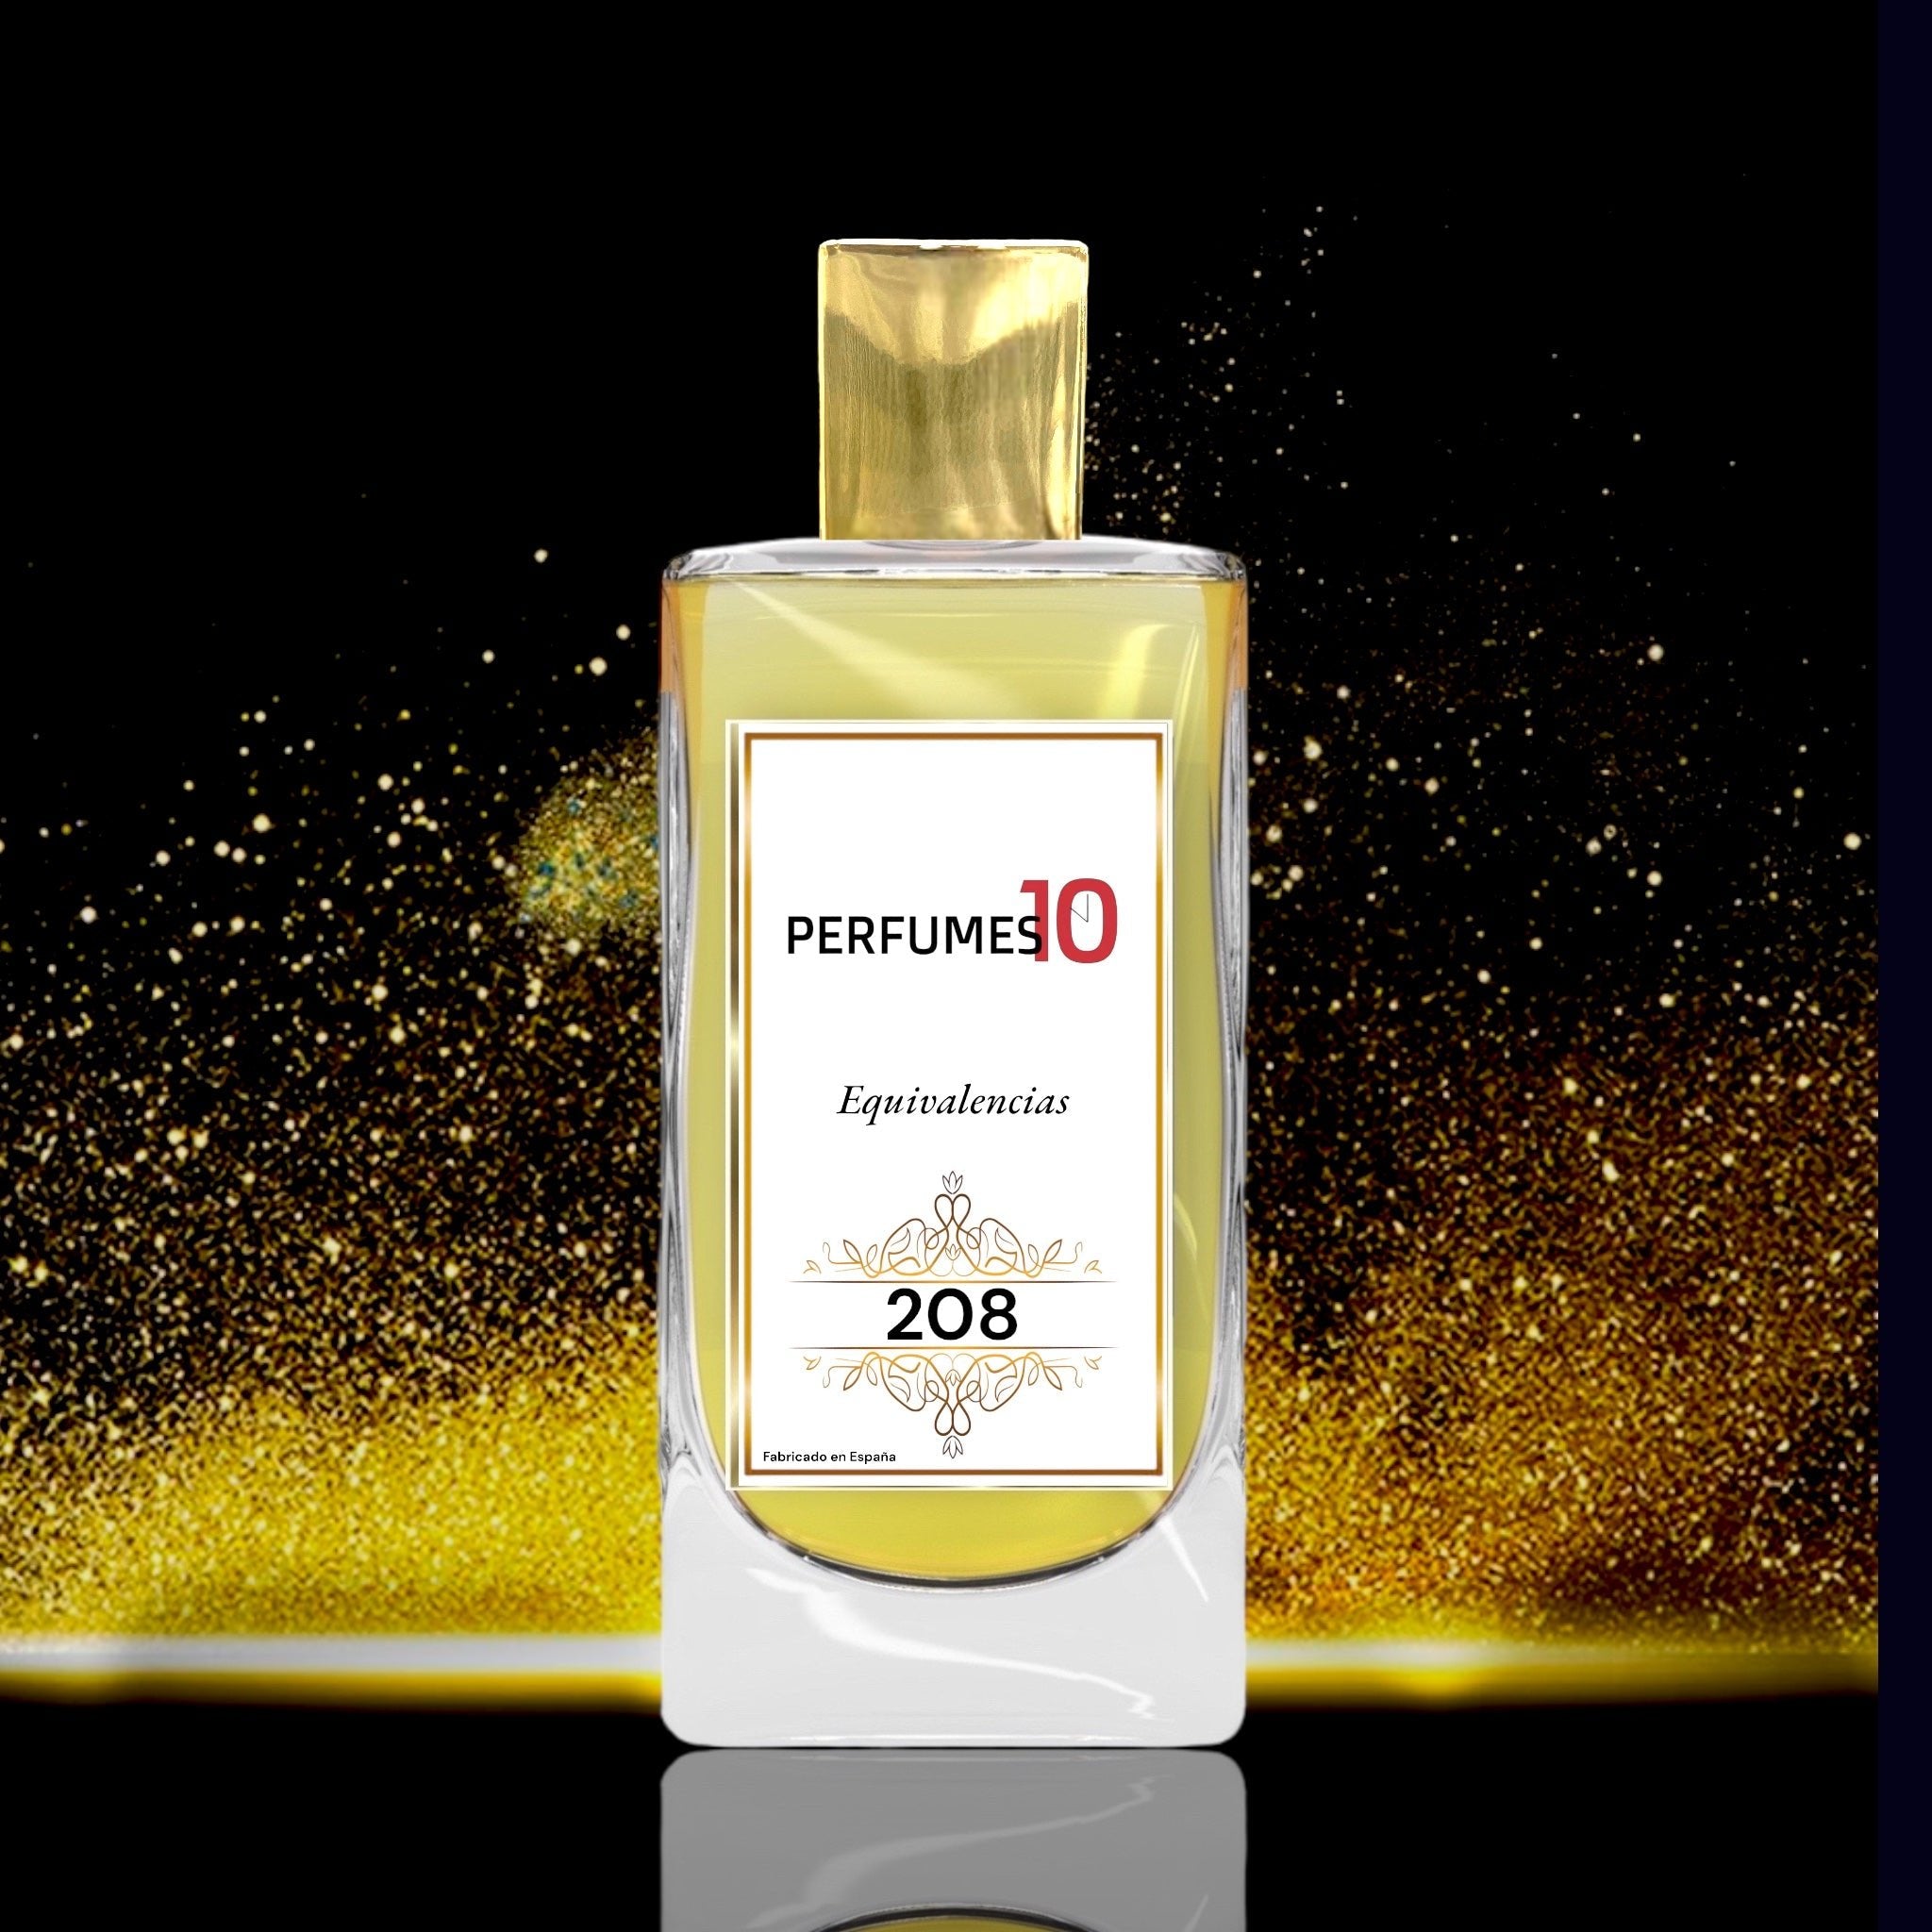 Aventus Creed imitation perfume for men – Perfumes10